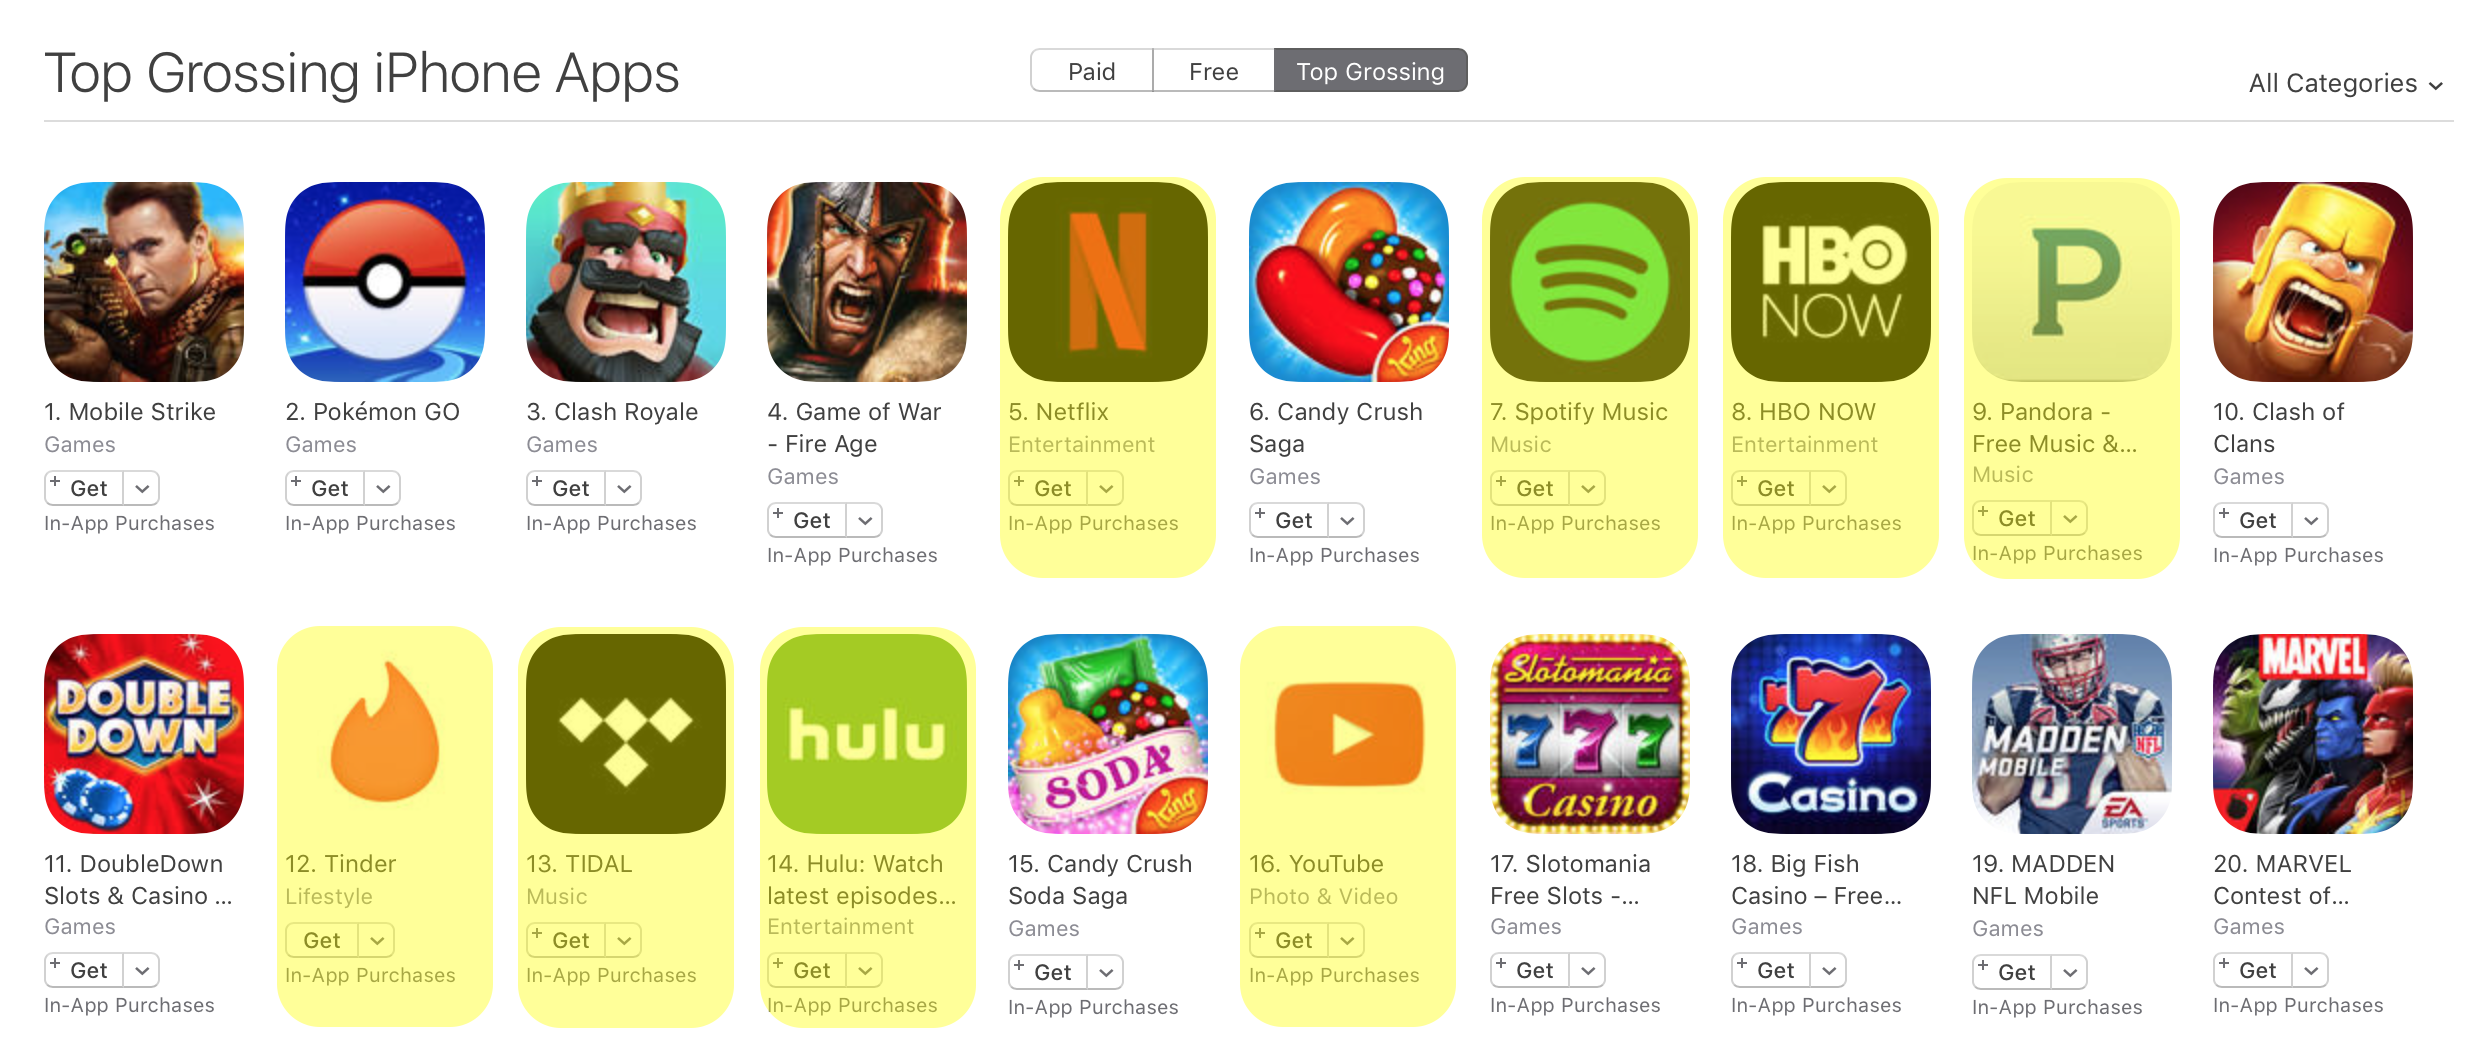 Top 20 grossing iPhone apps